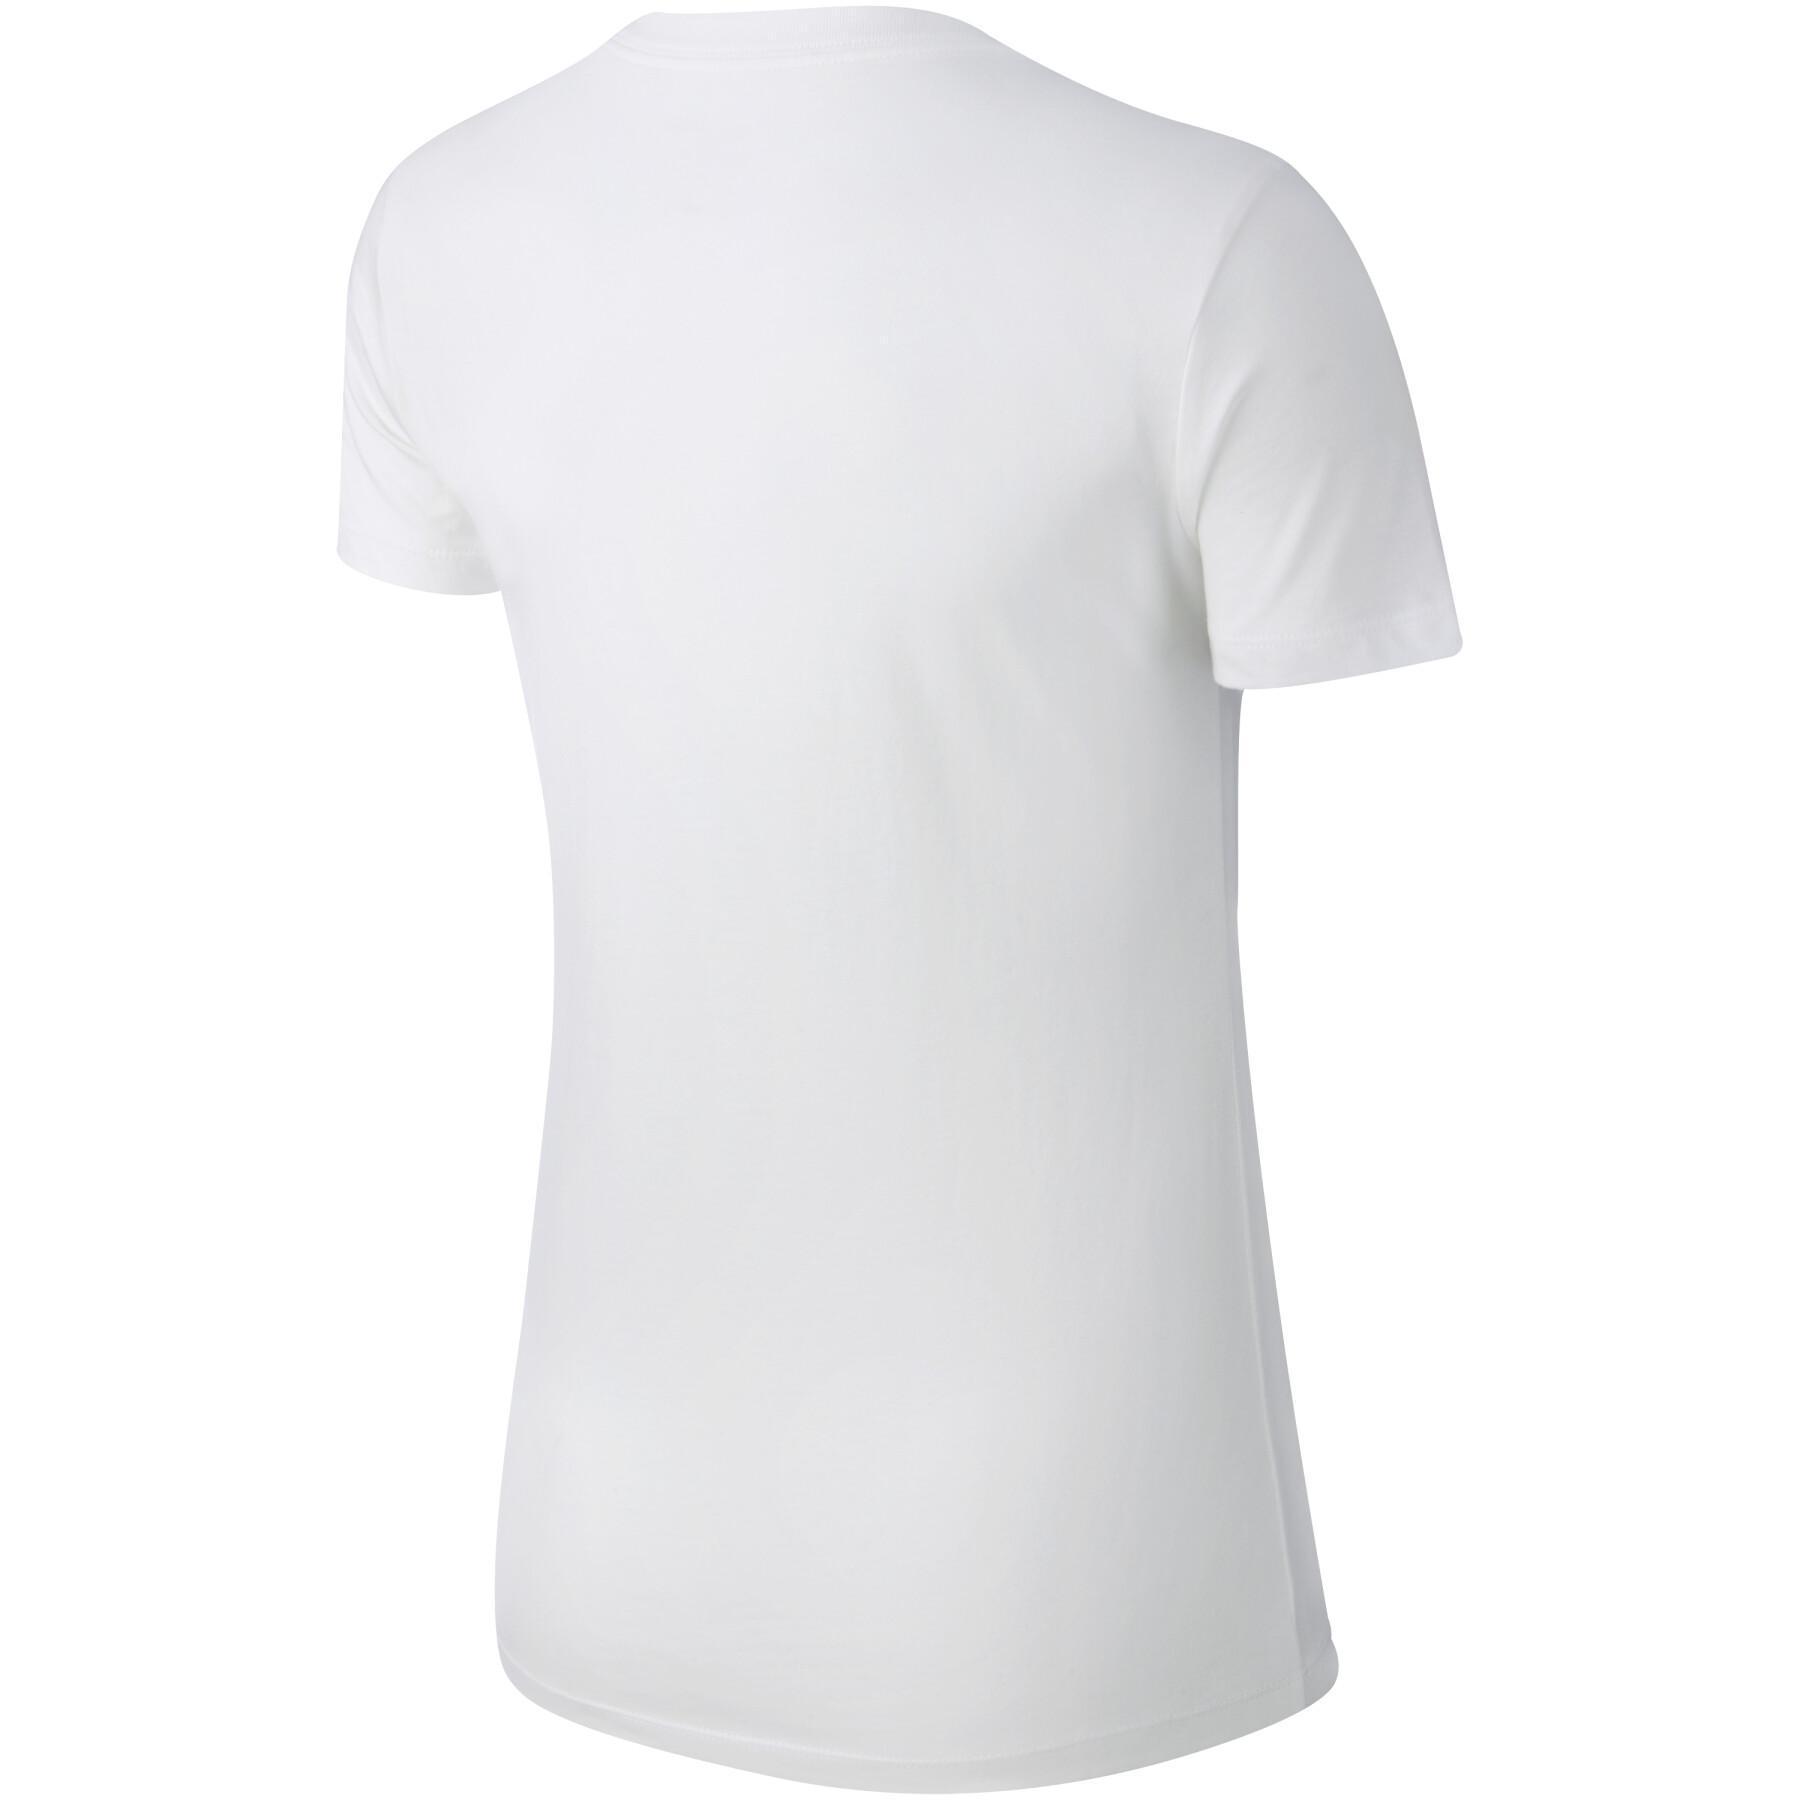 Camiseta mujer Nike sportswear essential